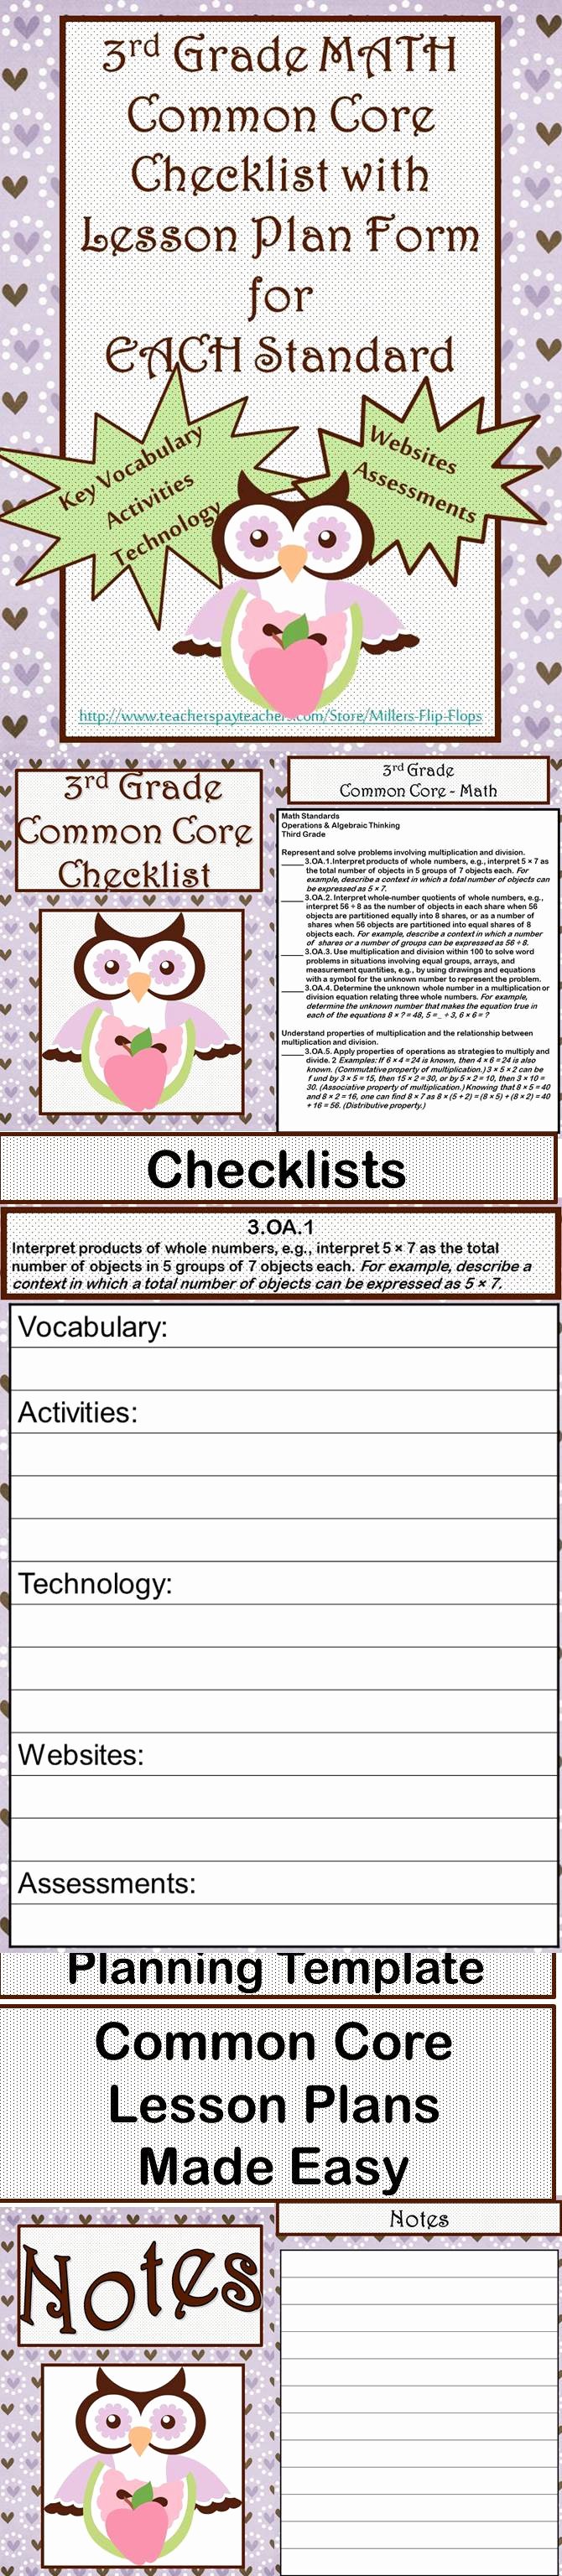 Standards Based Lesson Plan Template Unique 3rd Grade Math Mon Core Checklist Lesson Planning form Owl Purple